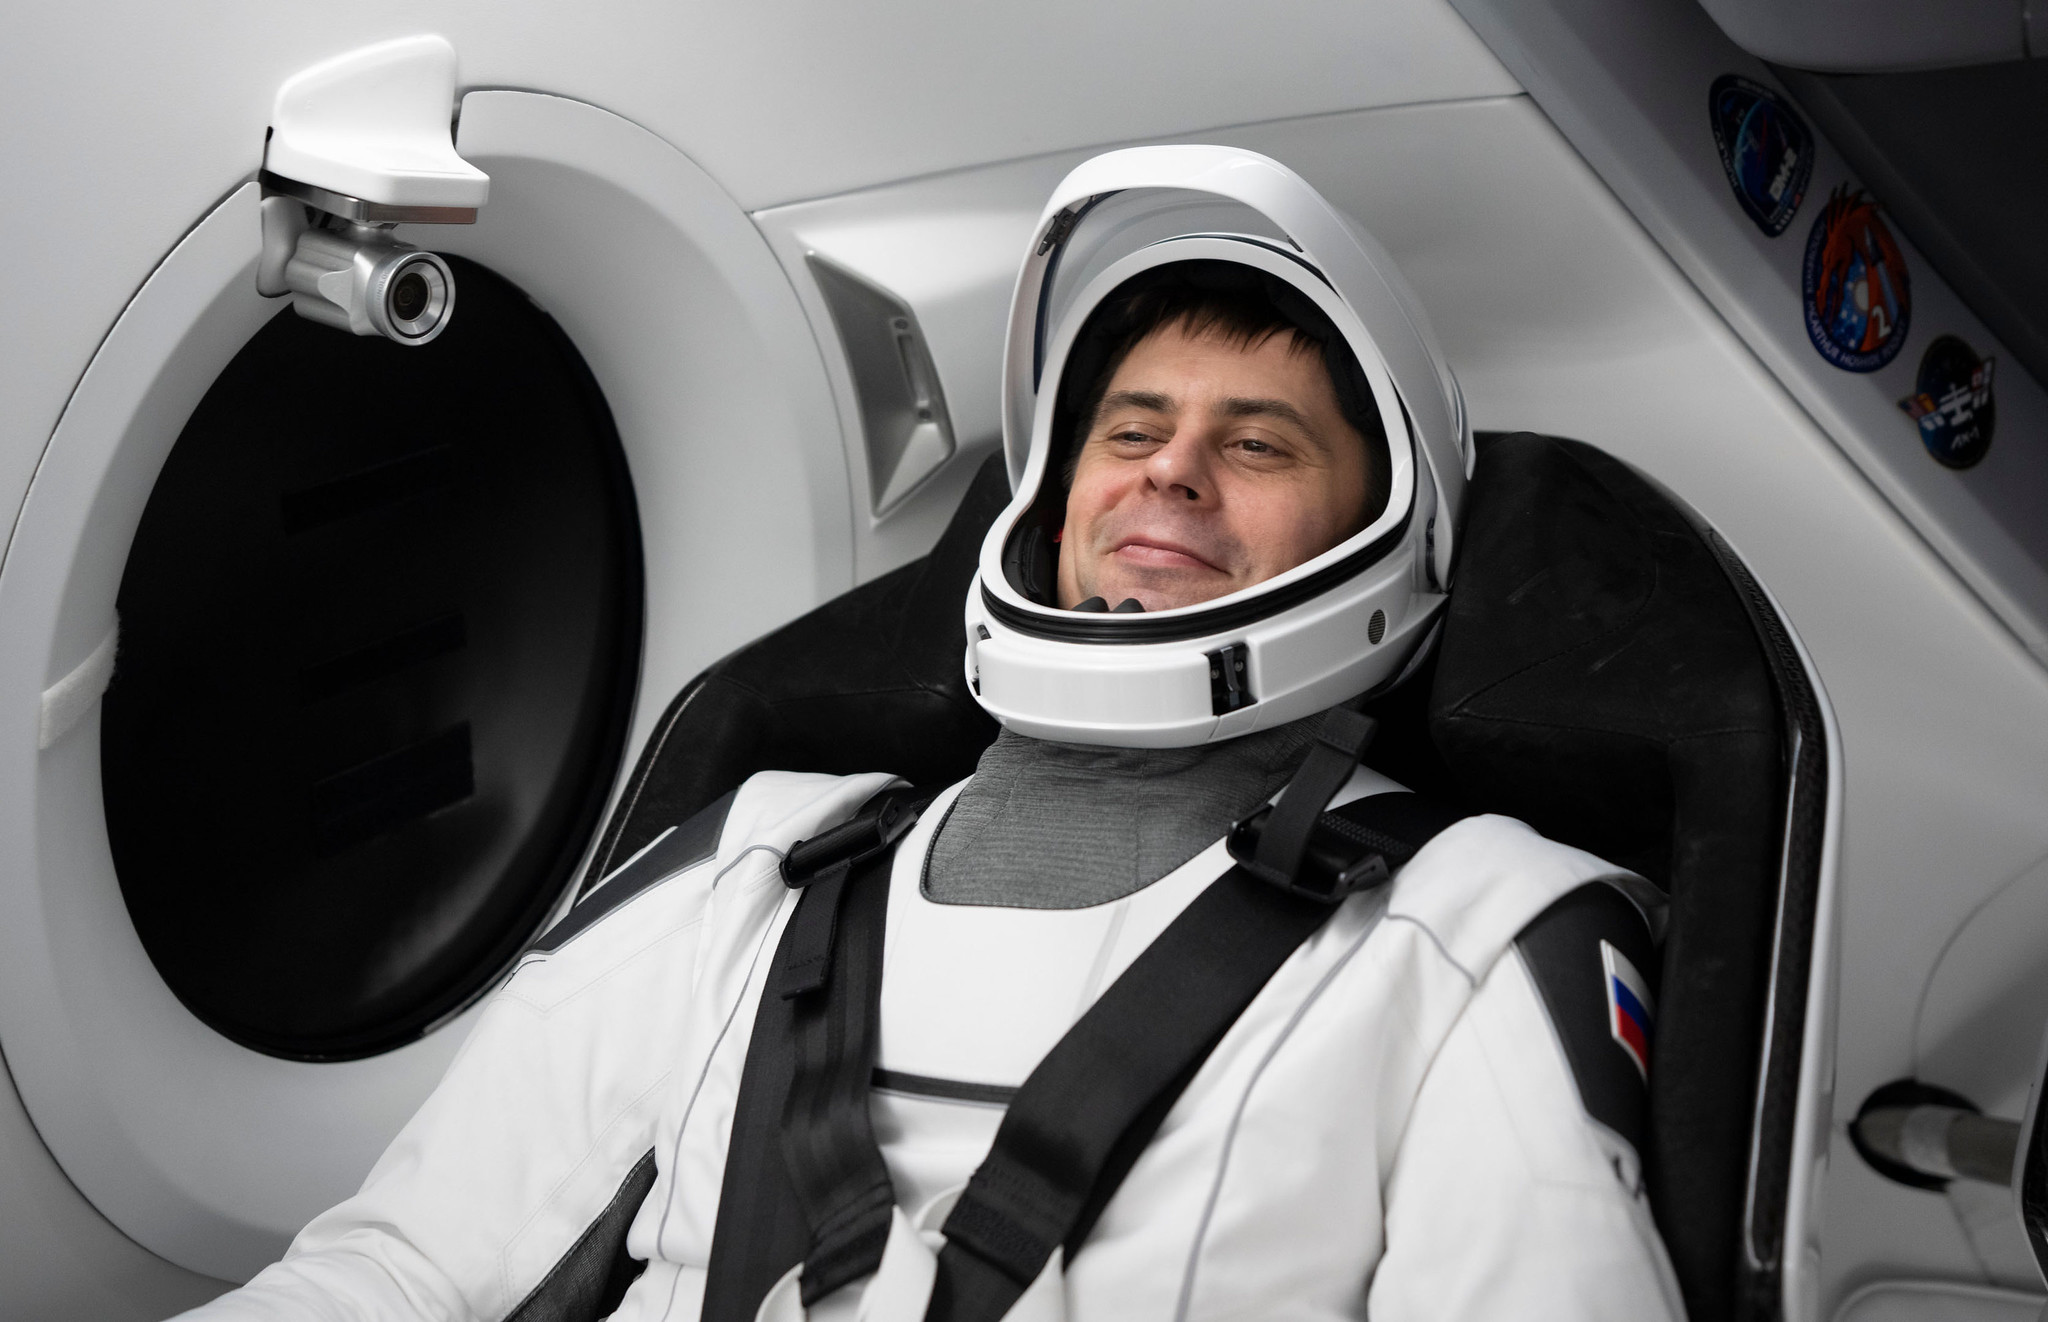 Roscosmos cosmonaut Andrey Fedyaev sitting in a spacecraft with seatbelt on